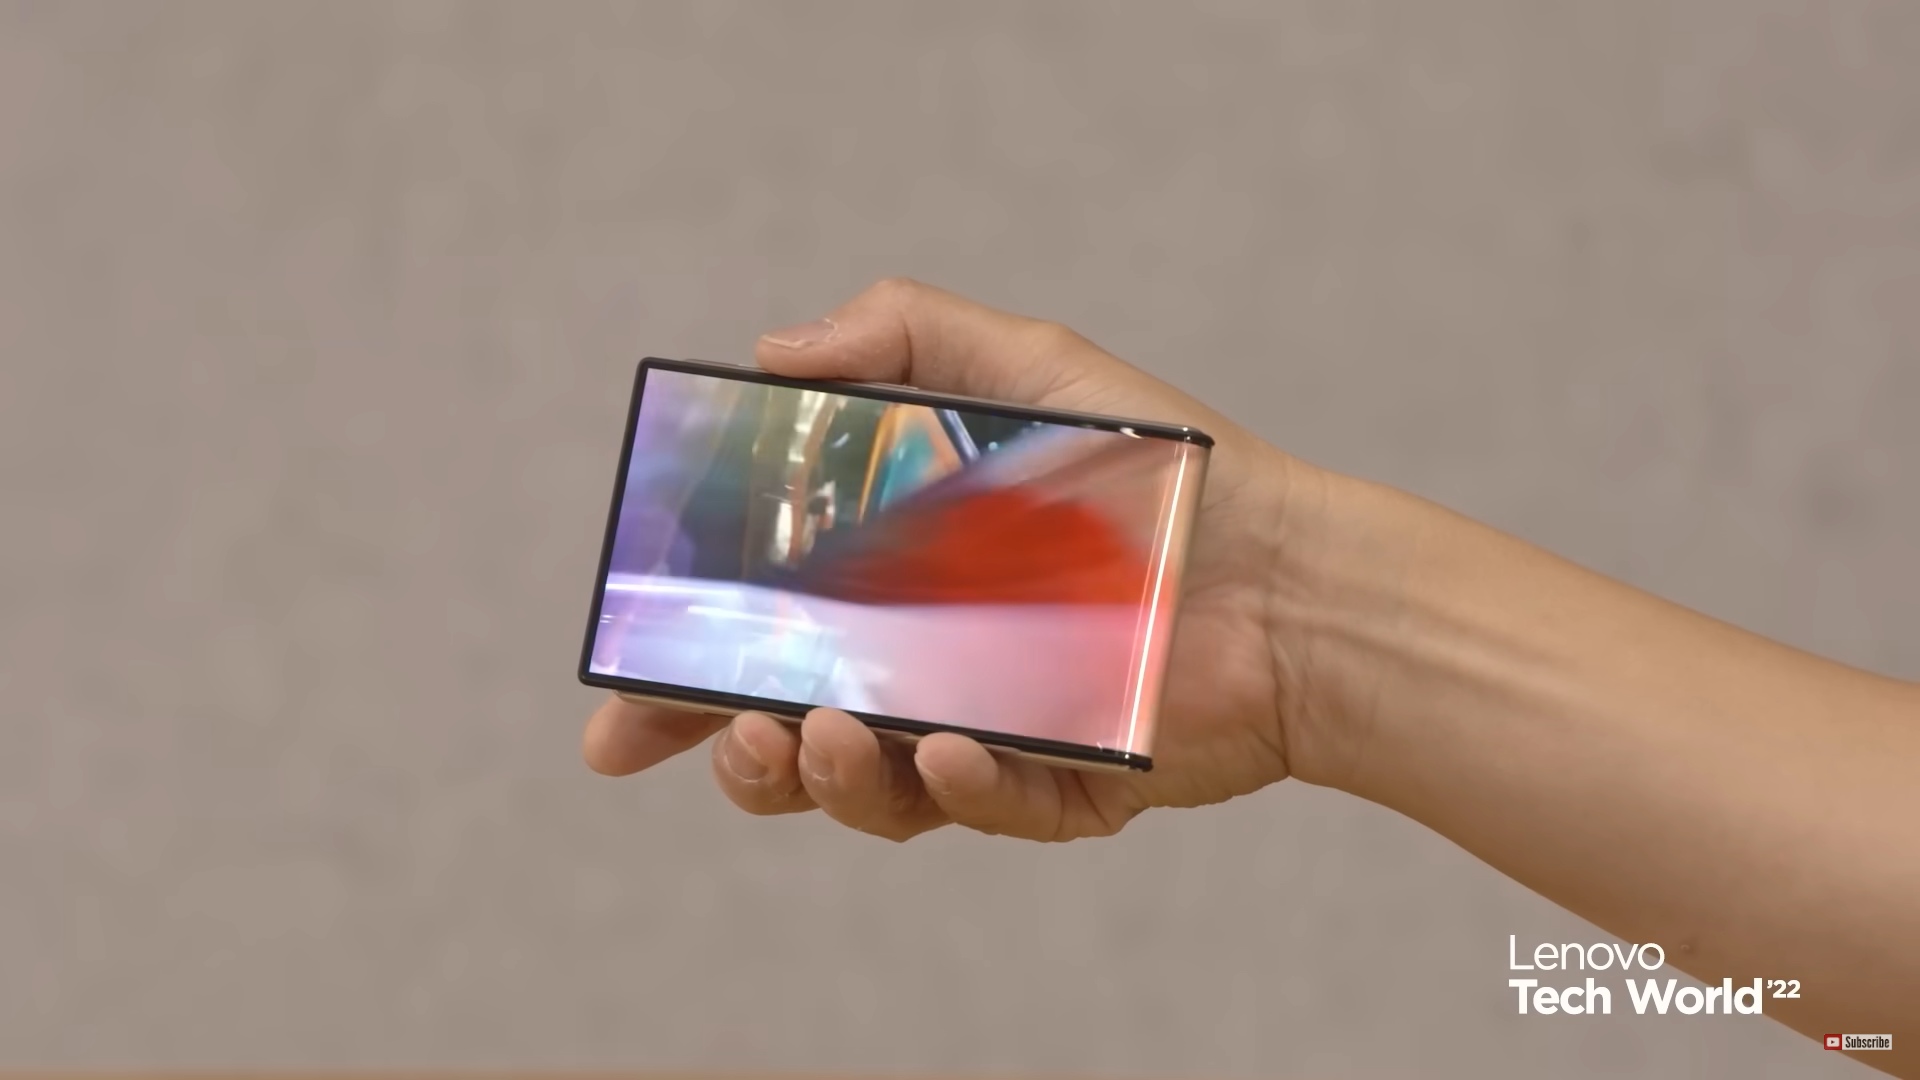 Motorola presents prototype of a rollable smartphone

